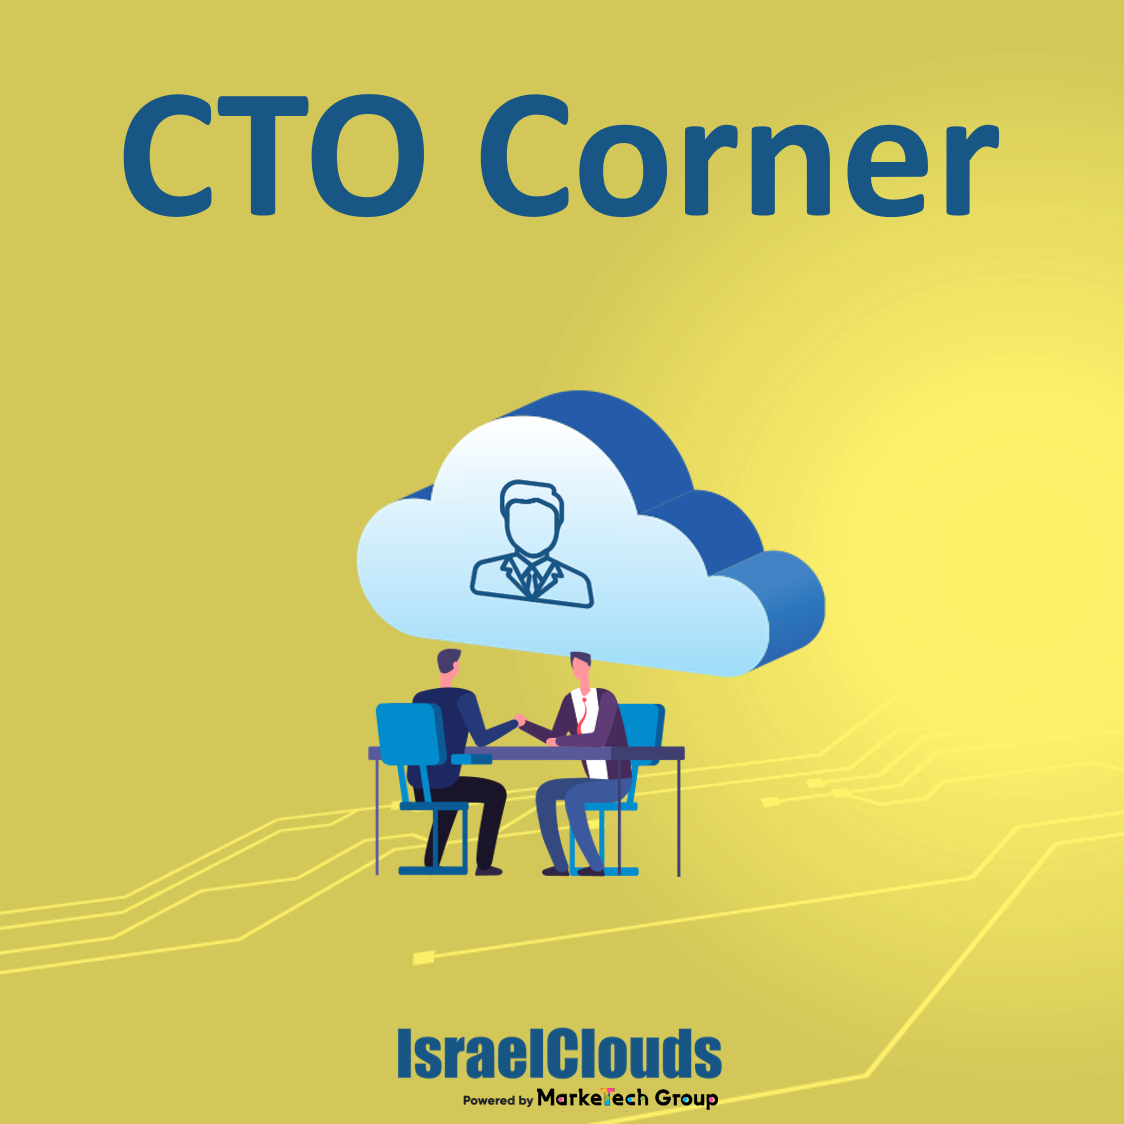 CTO Corner: Episode 21 - The Future of Cybersecurity, Moshe Ferber